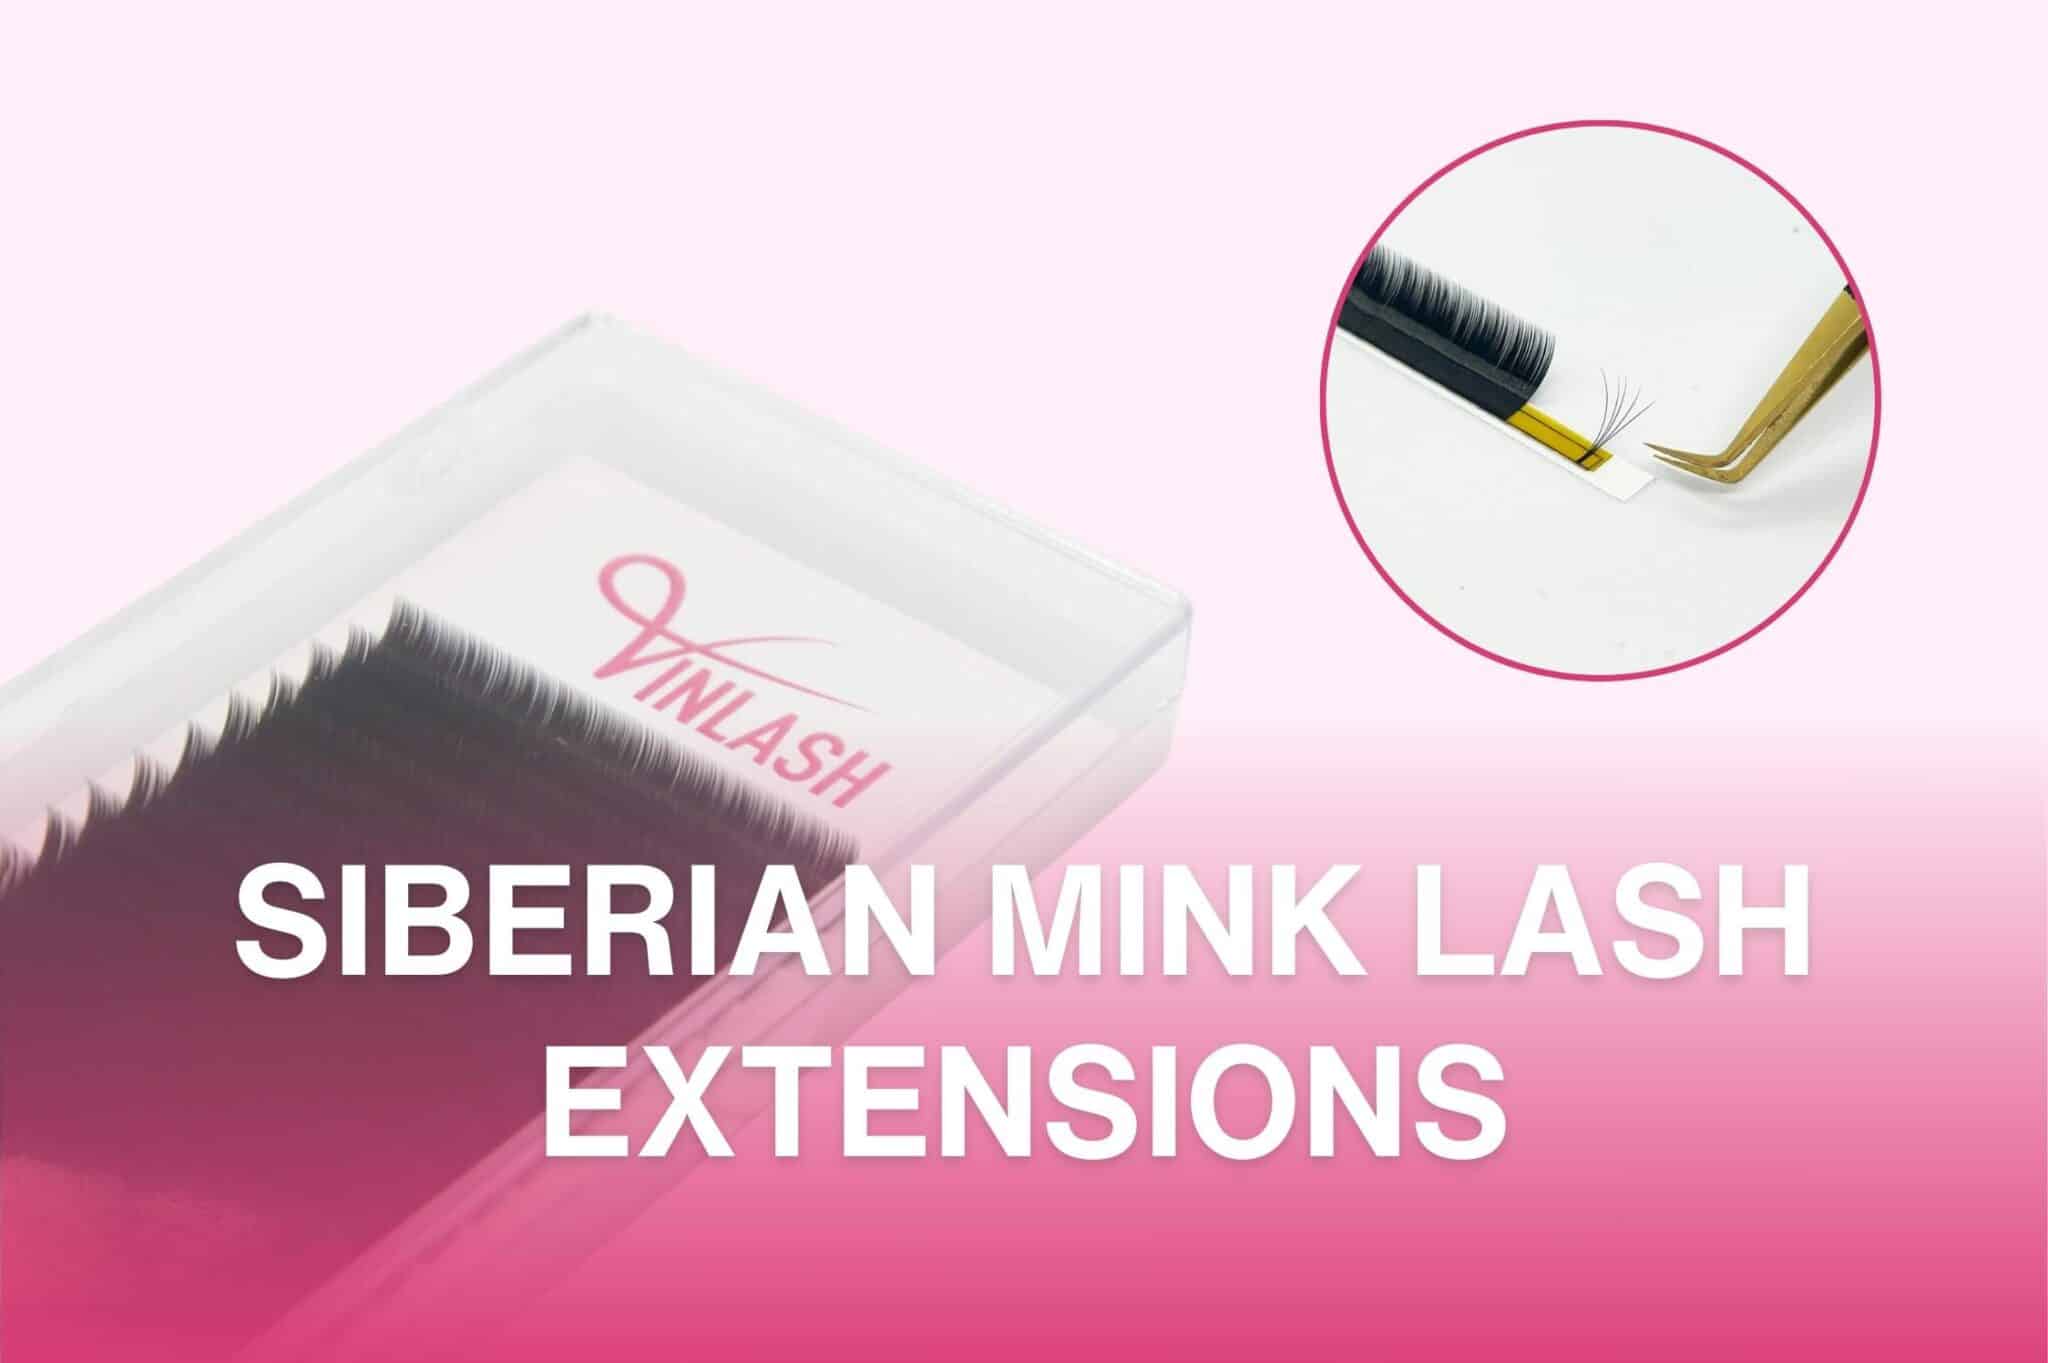 Siberian mink lash extensions tag